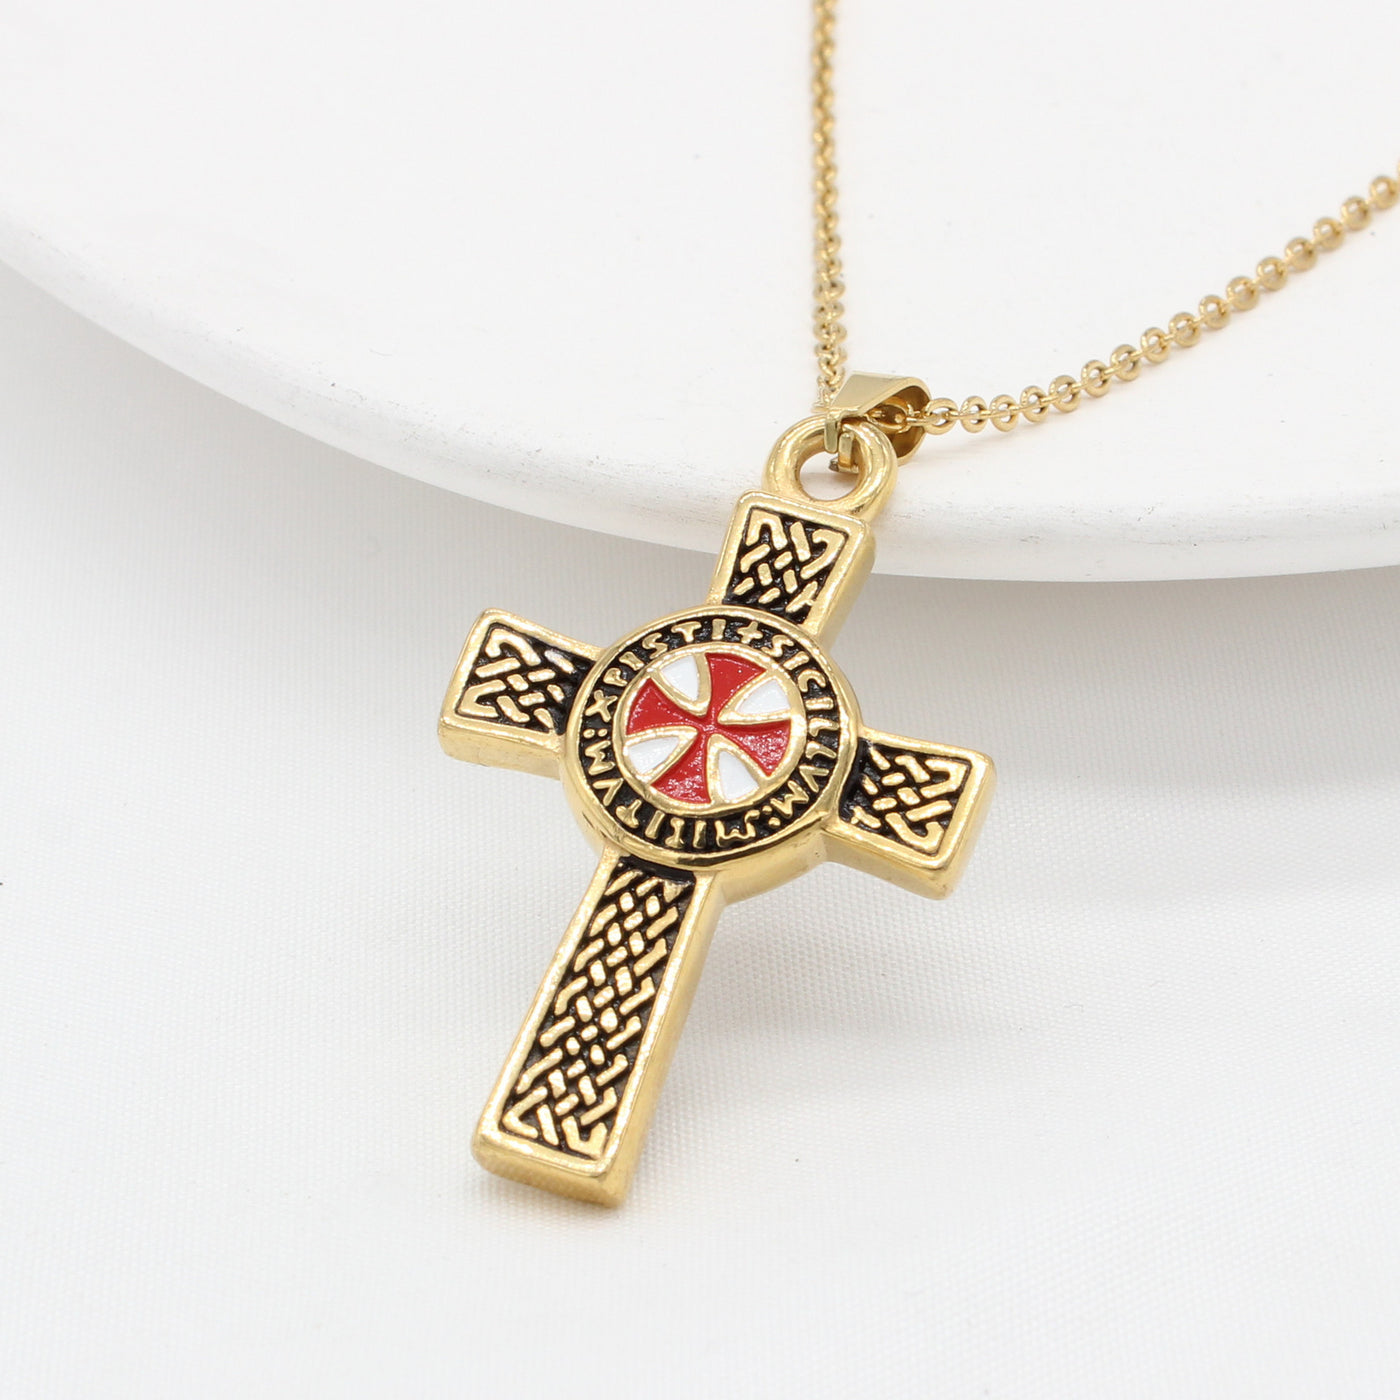 Knights Templar Cross Pendant Necklace